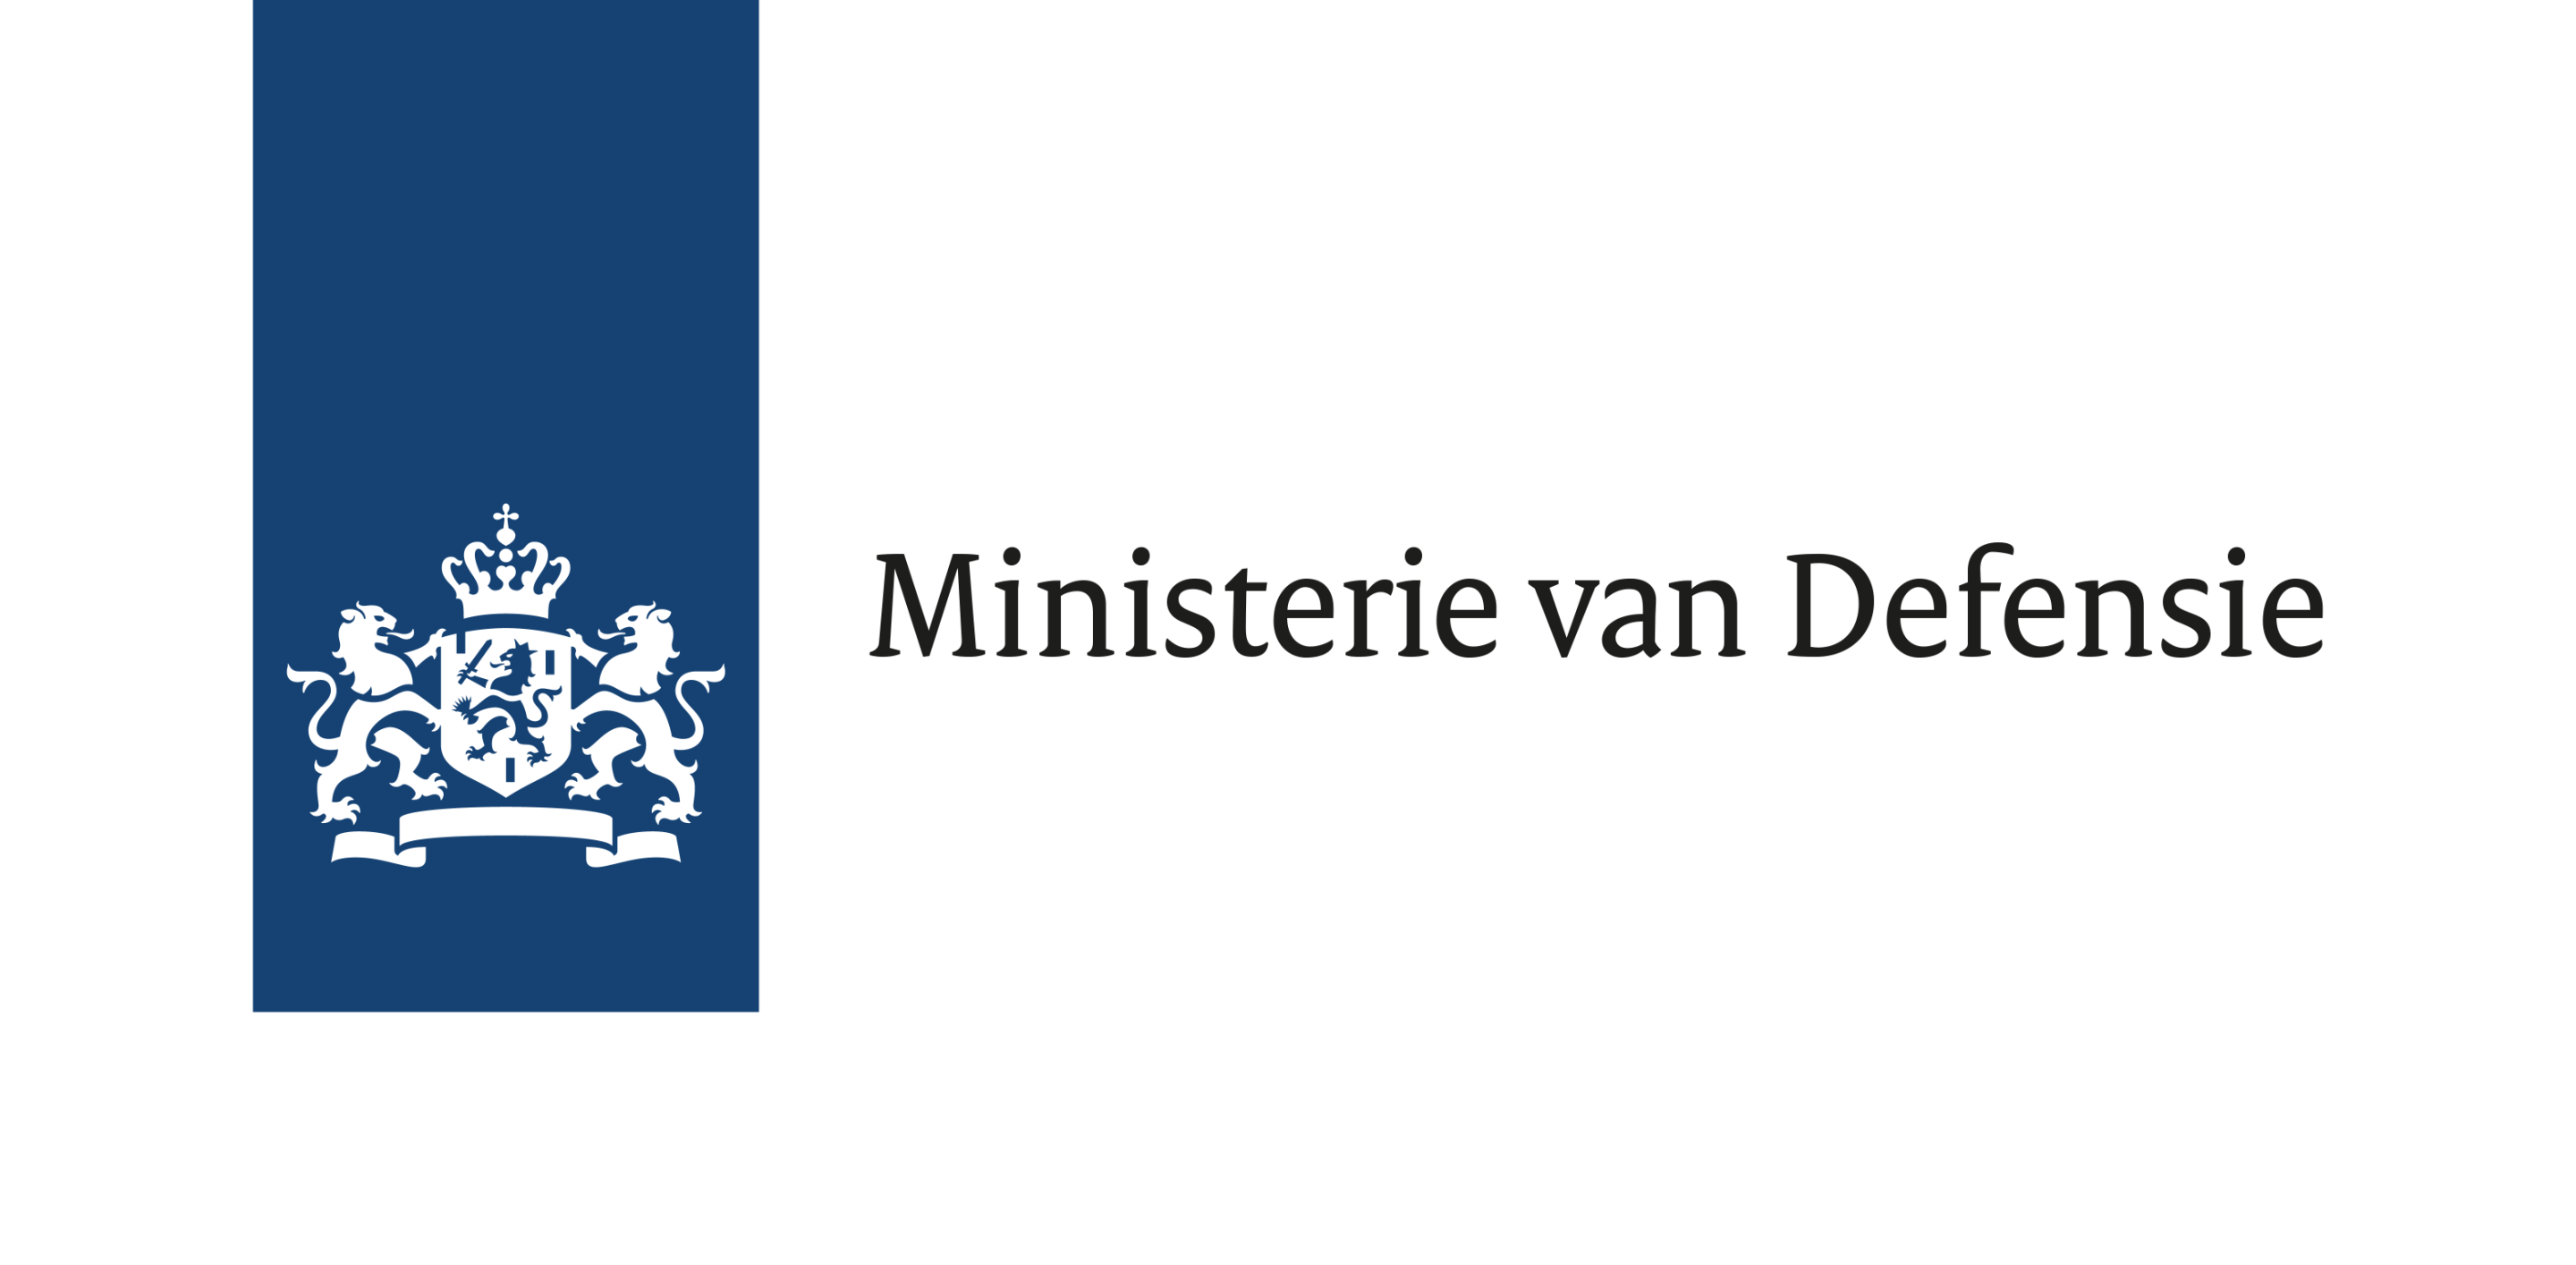 ministerie van defensie logo Nederlands